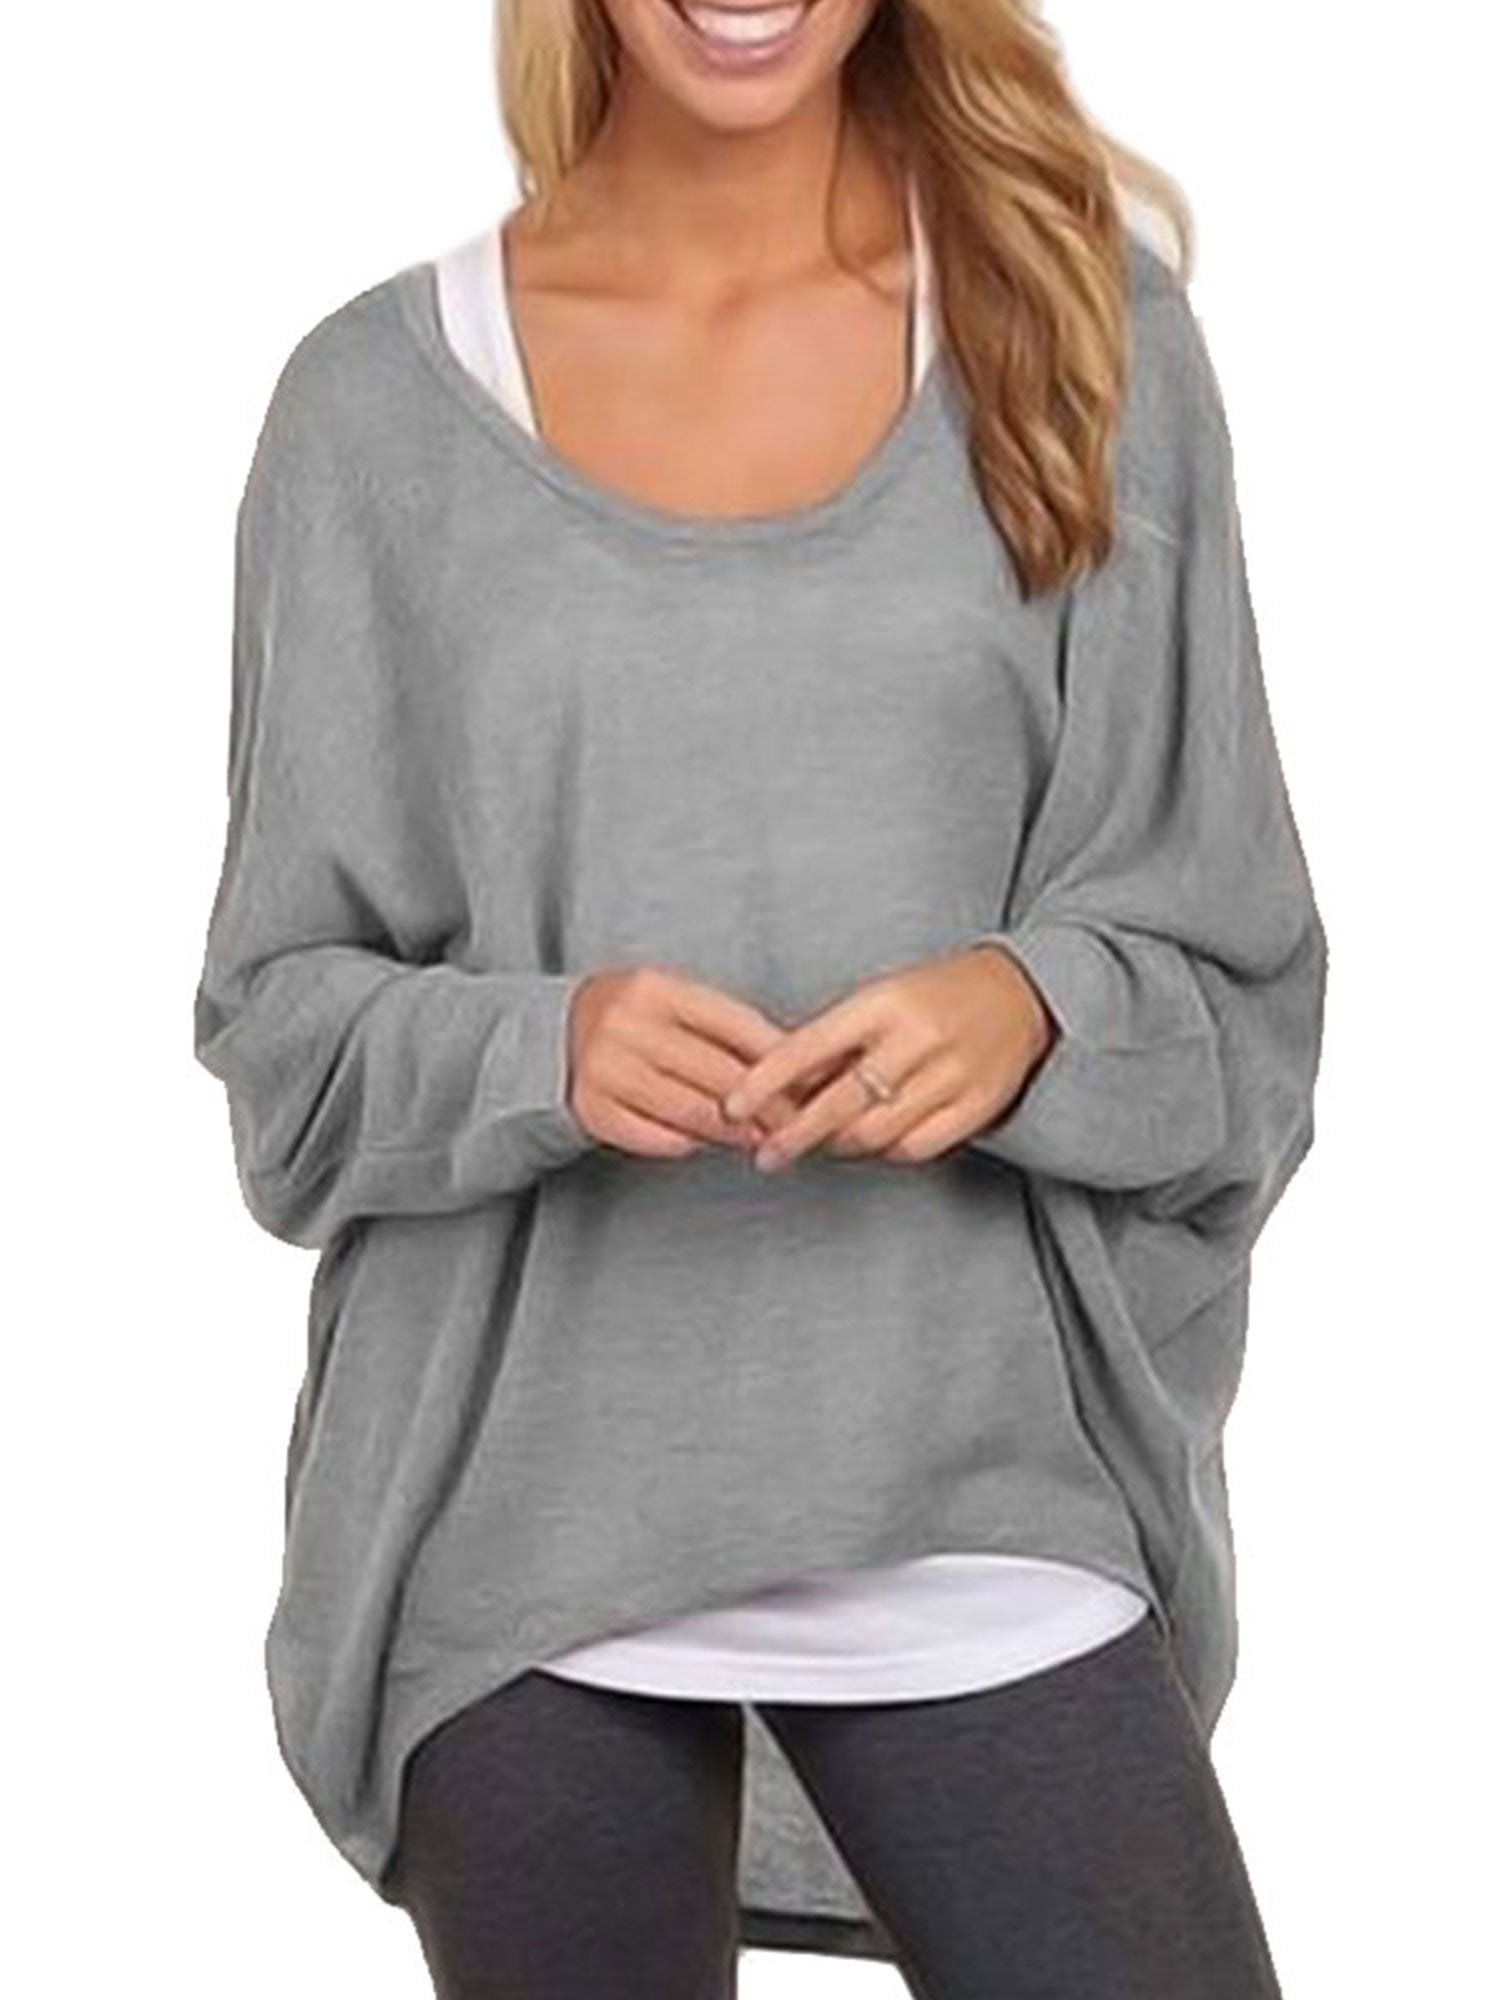 2020 Women’s Solid Sporty Sweatshirt Crew Neck Long Sleeves Pullover Loose Soft Irregular Hems Tops Shirts Plus Size 